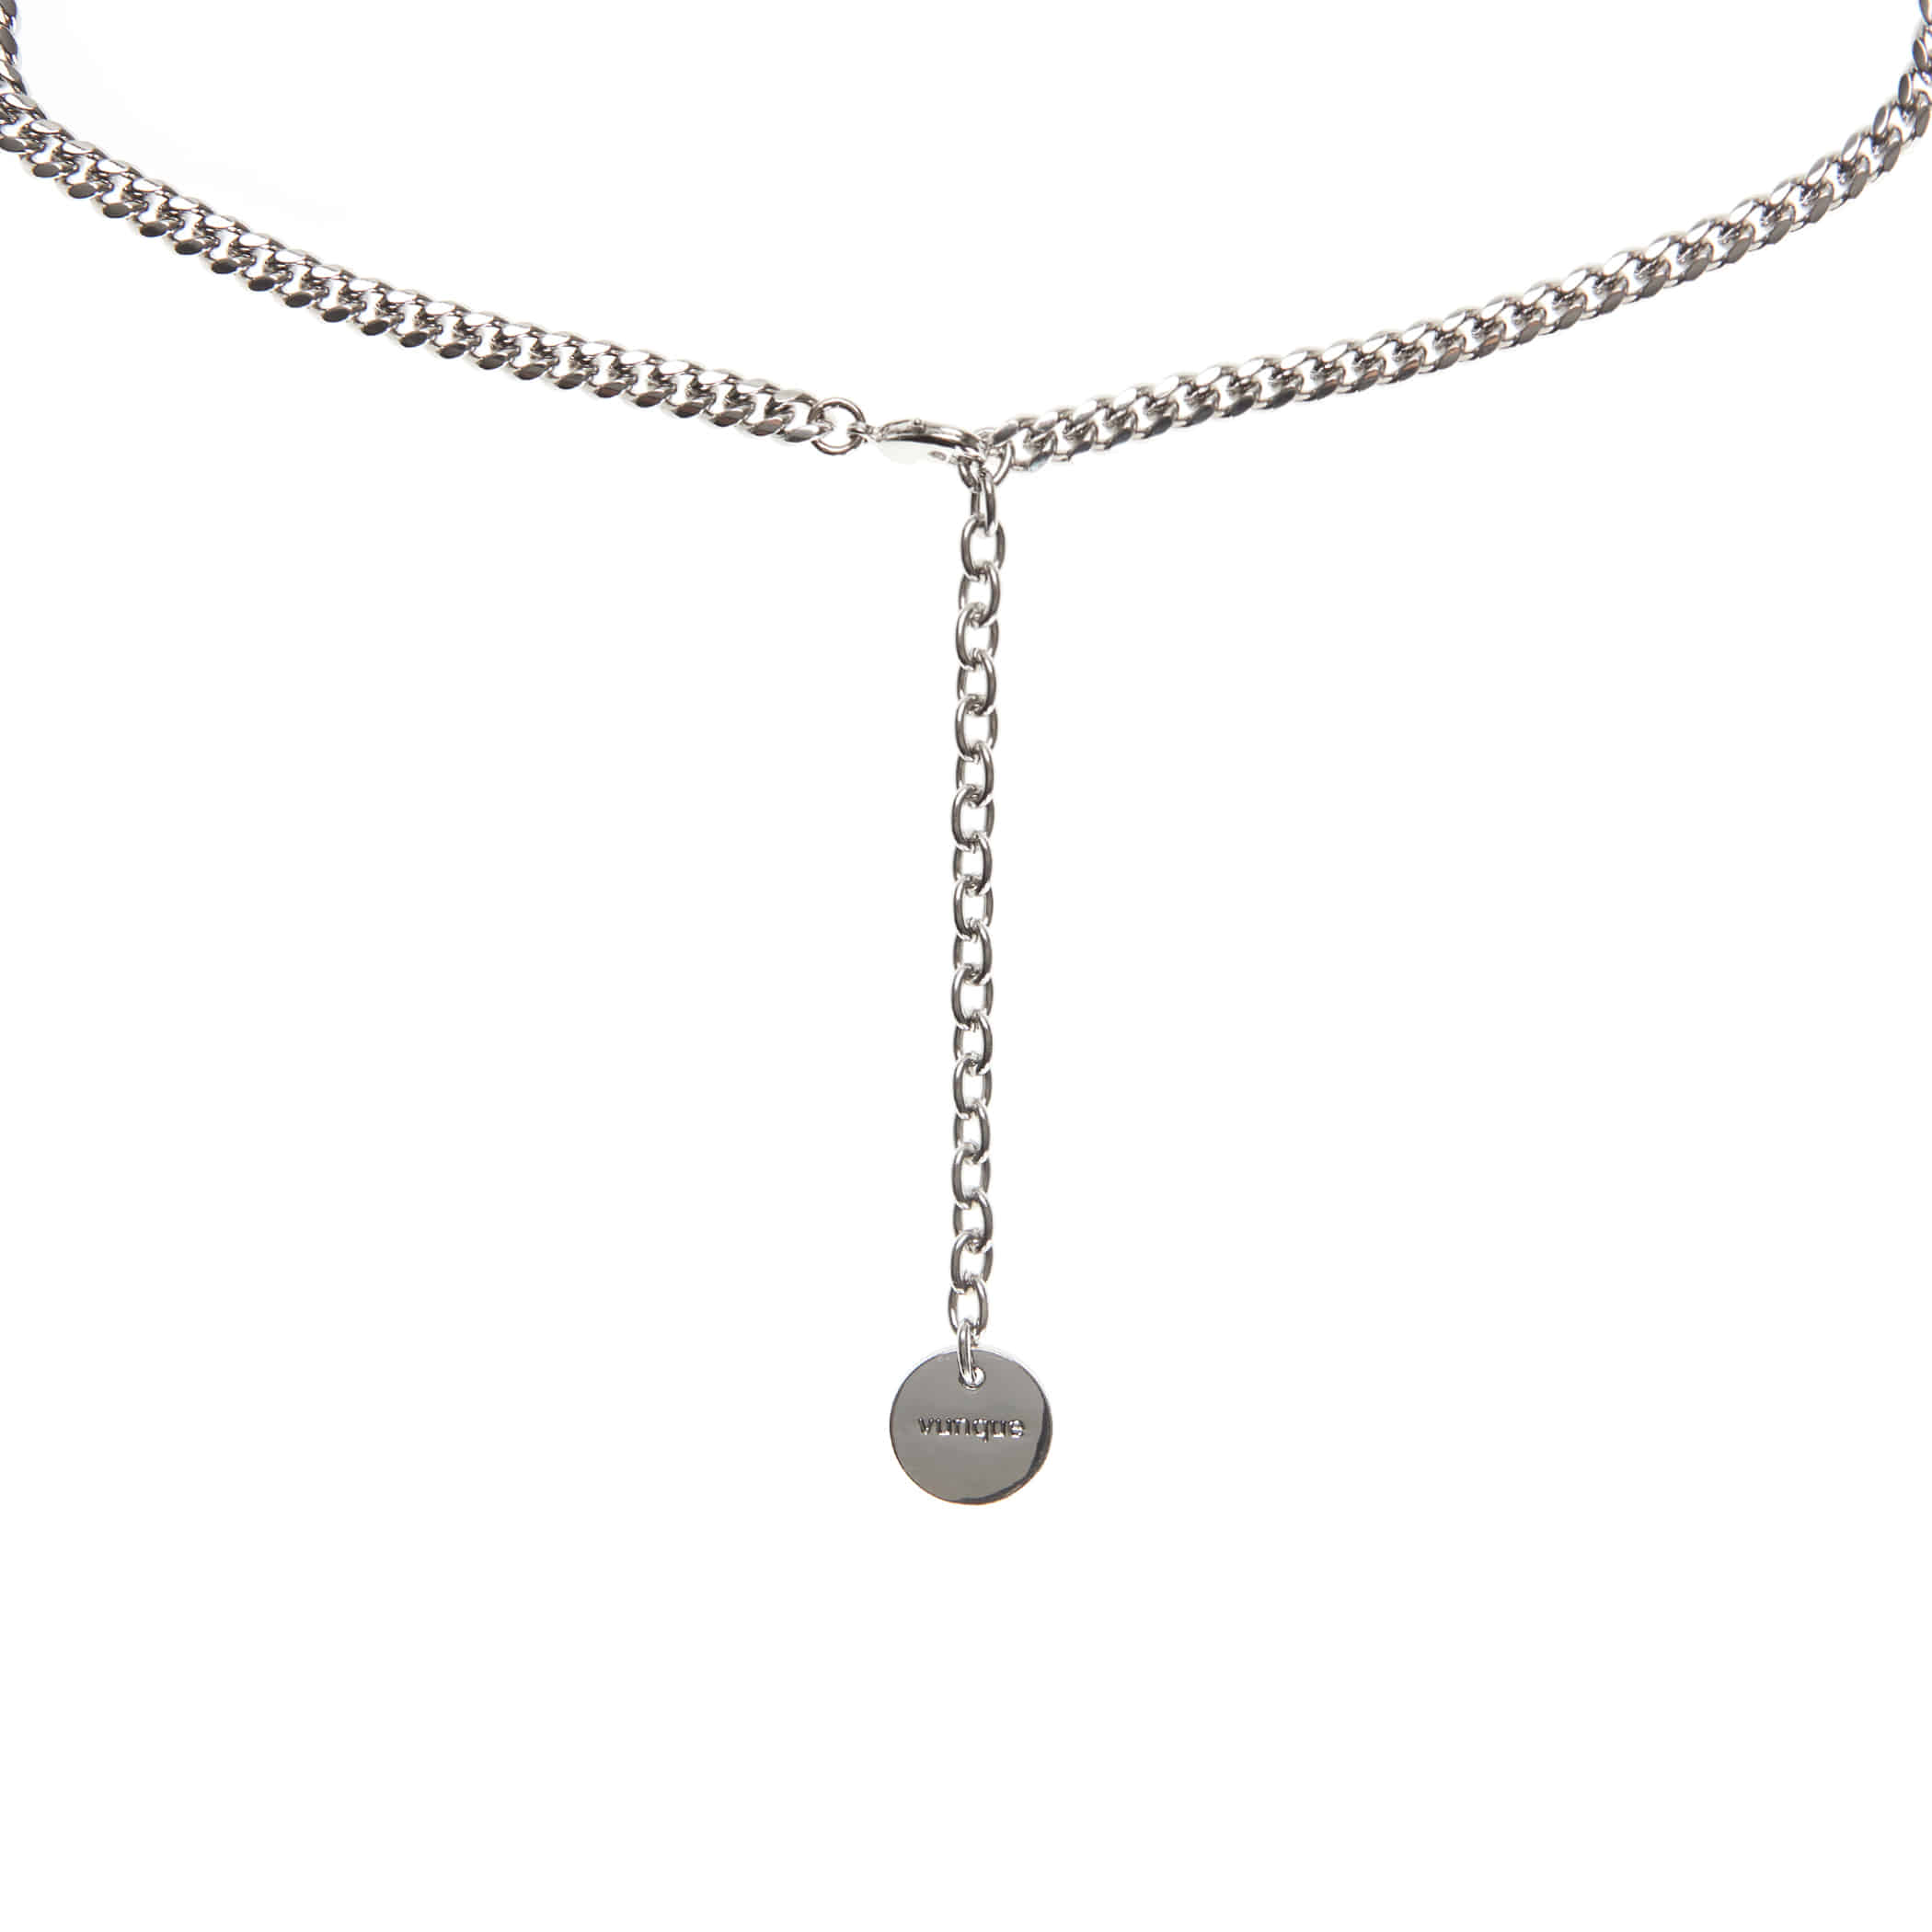 Mercury Chain Necklace (머큐리 체인 네크리스) Silver